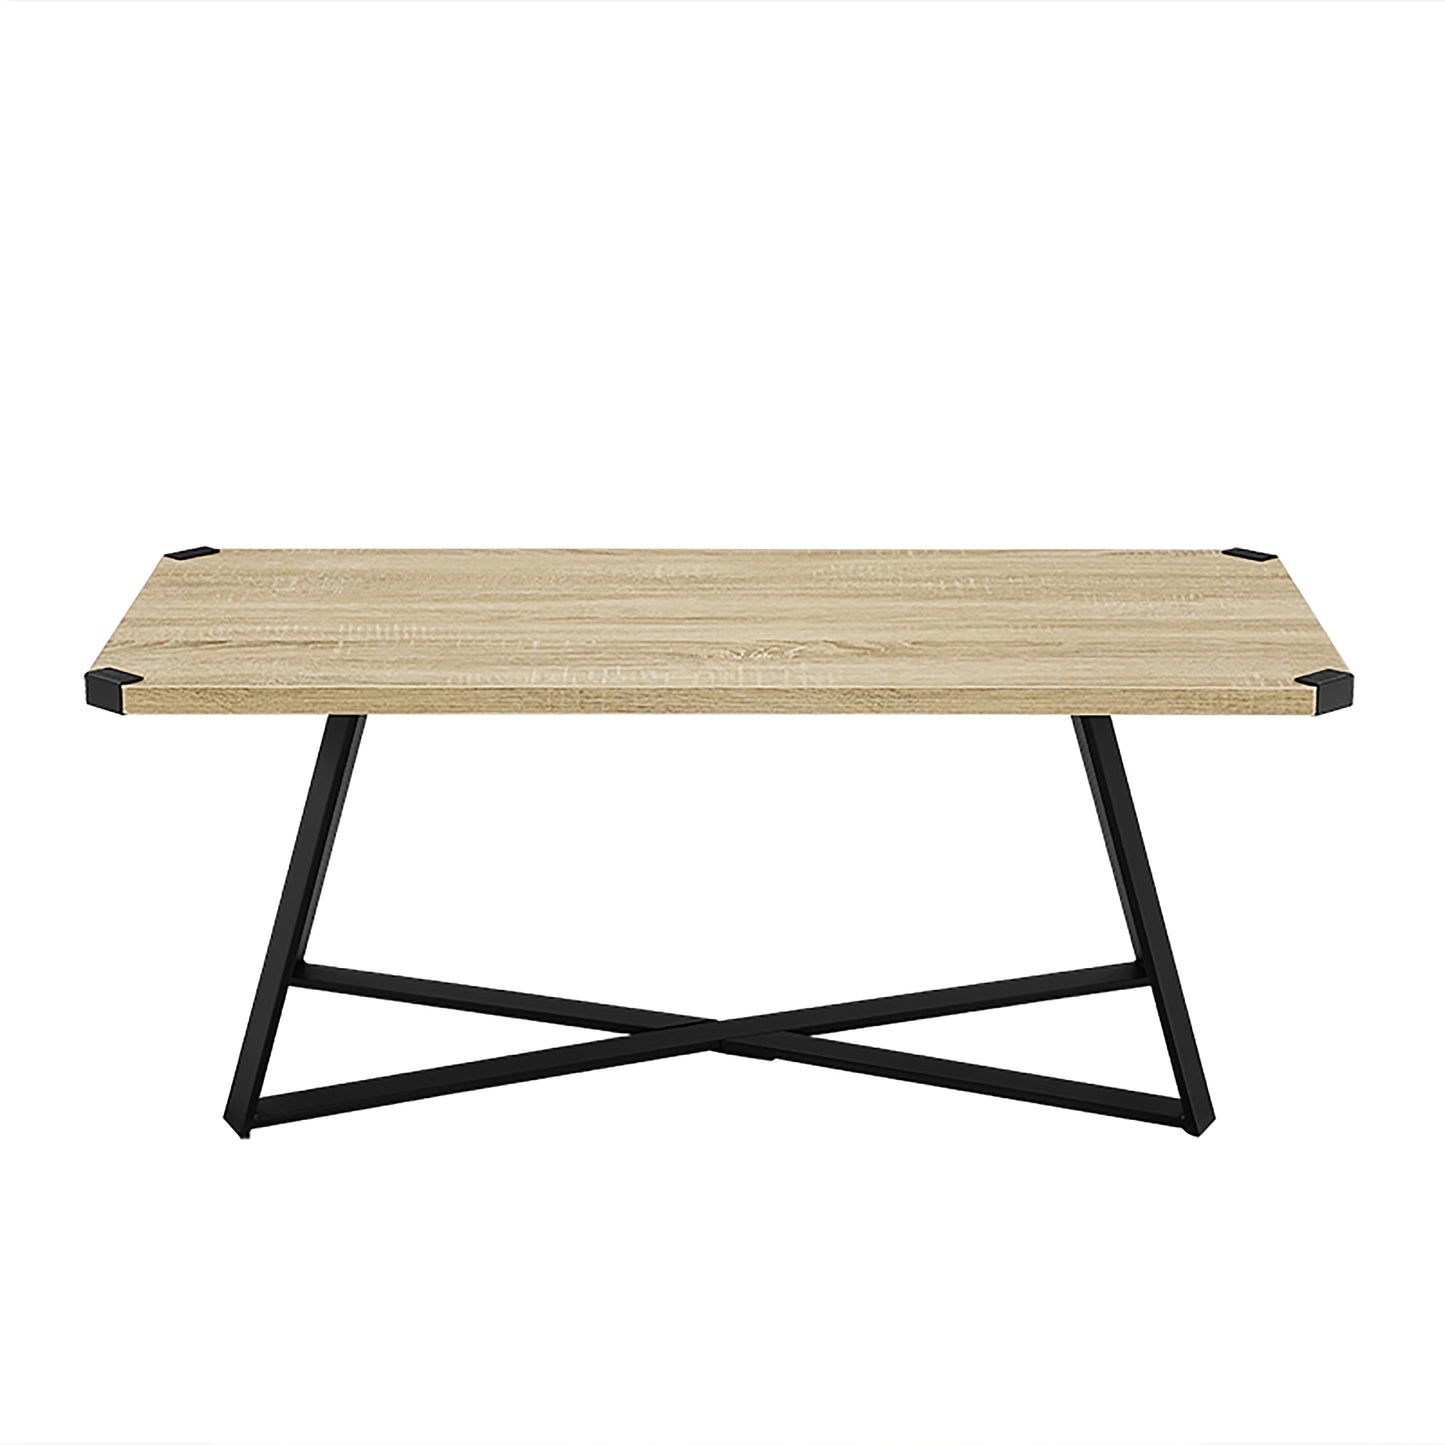 Criterion Capri Coffee Table 1100mm Rectangular Table, Black Metal Leg and Metal Highlights Oak